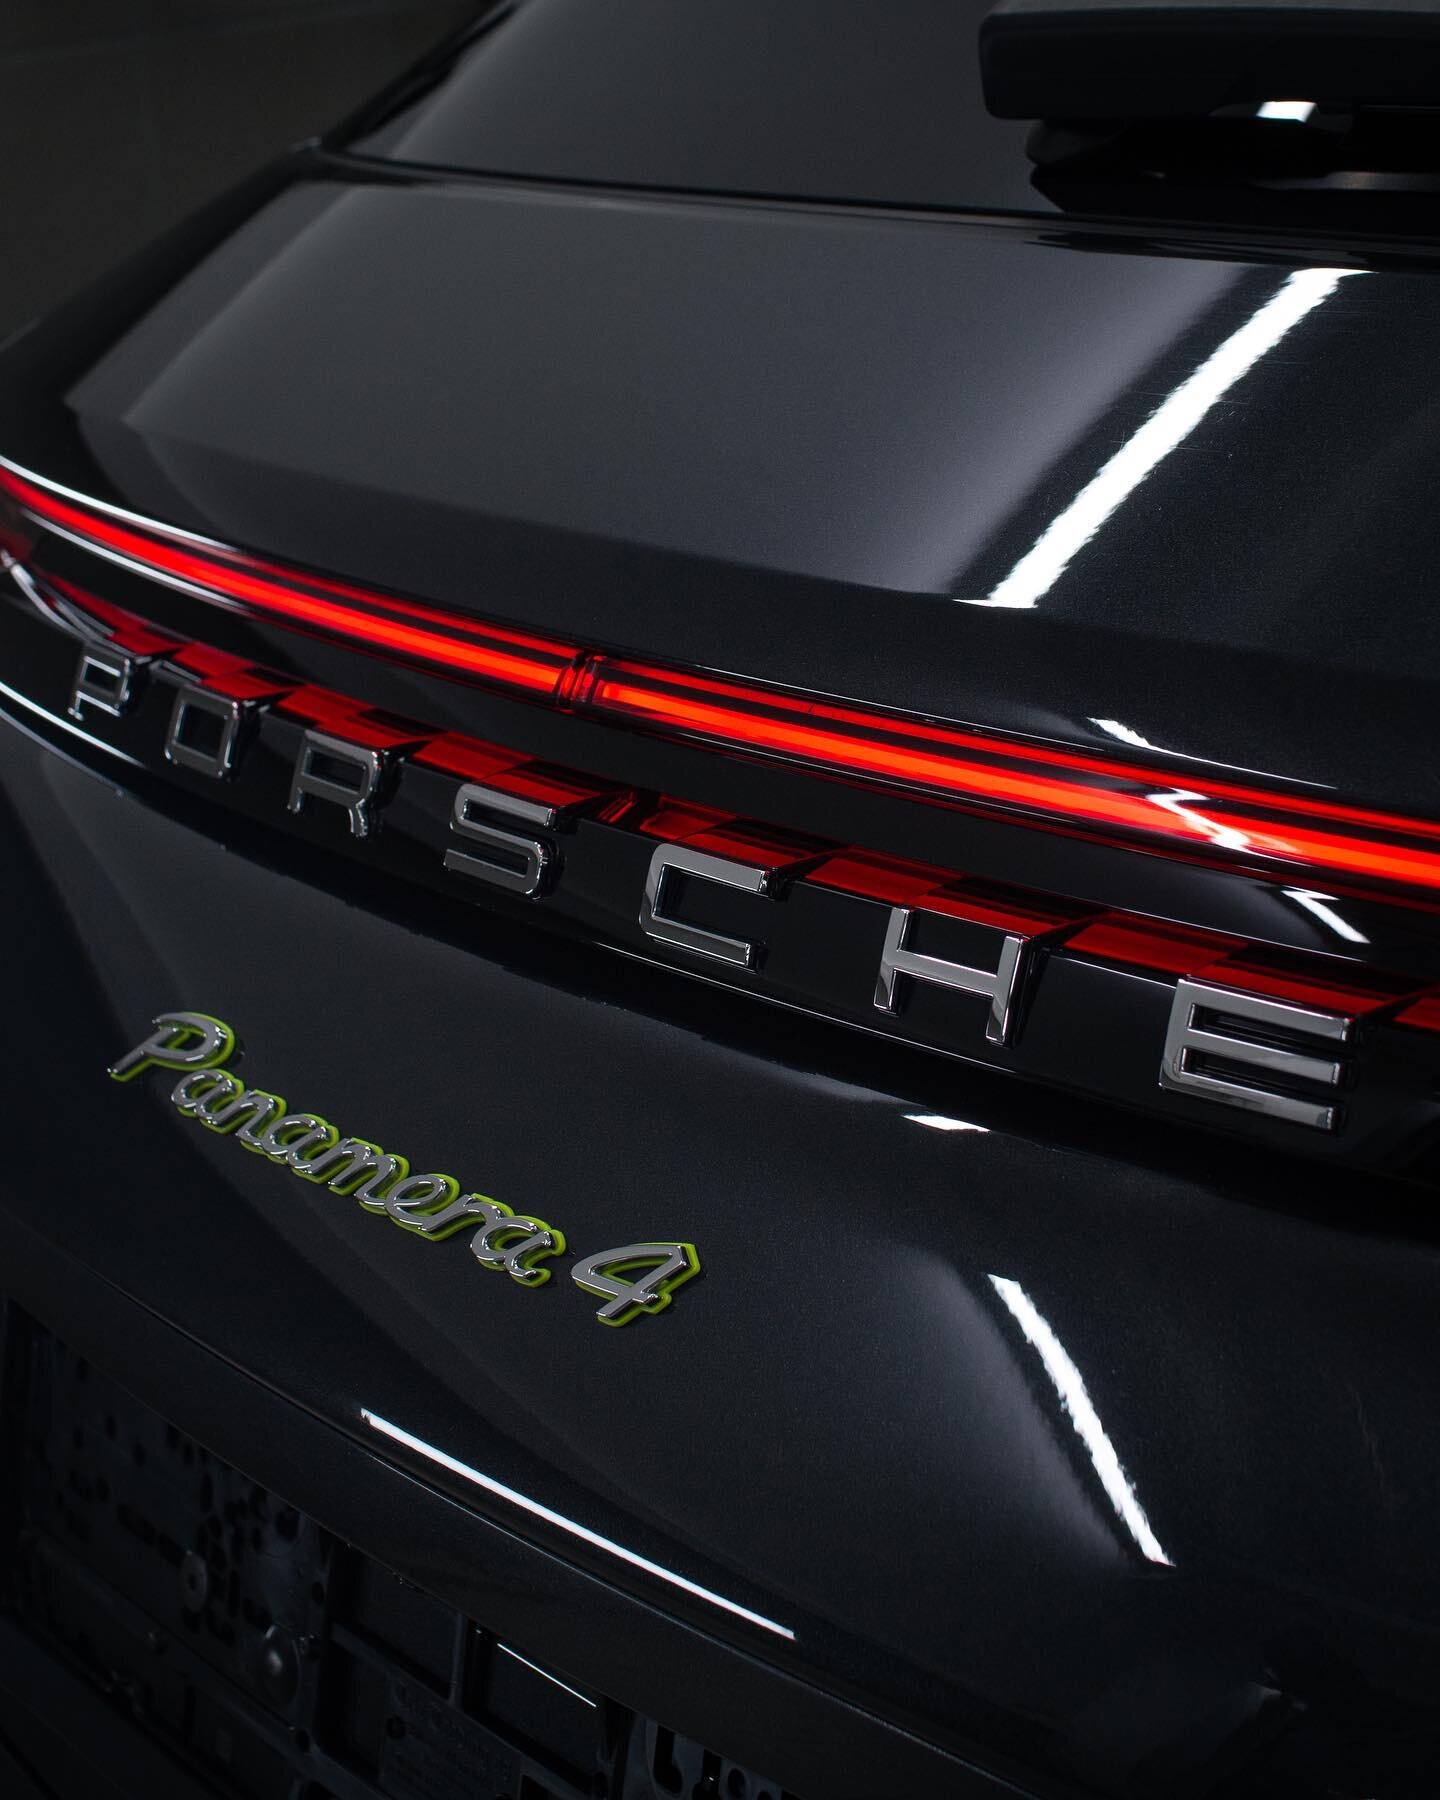 Porsche Panamera 4 back to looking like a million bucks!💸
Full Shine🧼
.
.
.
.
.
.
.

#panamera #porsche #gt #porschepanamera #s #cayenne #turbo #rs #carrera #bmw #macan #cayman #cars #car #porscheclub #amg #boxster #mercedes #panameraturbo #panamer